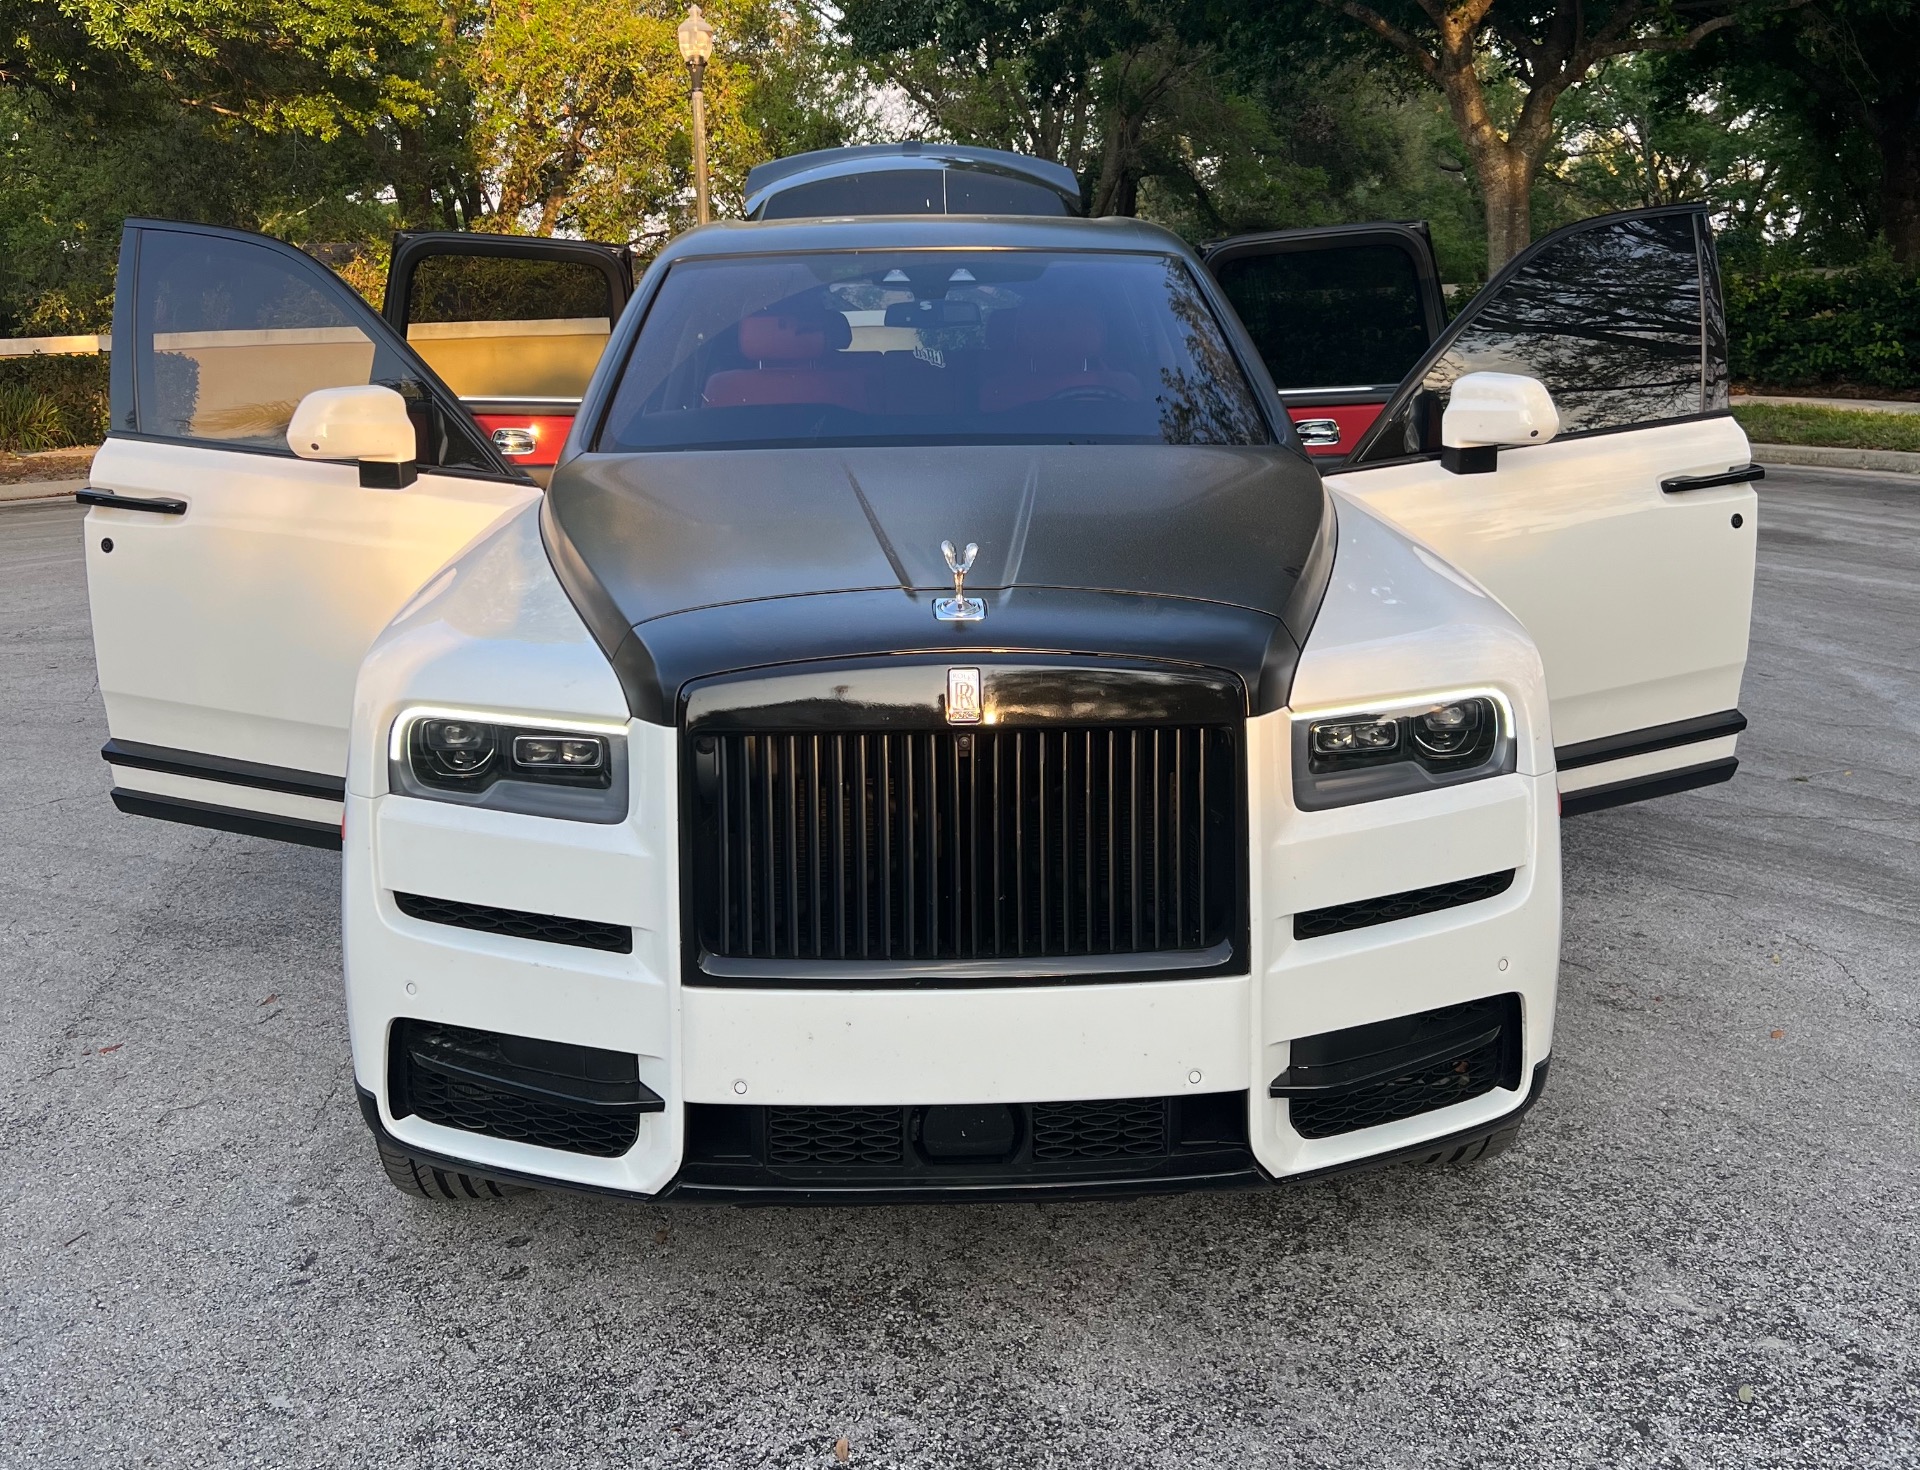 Rolls Royce Cullinan (2019) - The Best Luxury SUV! 